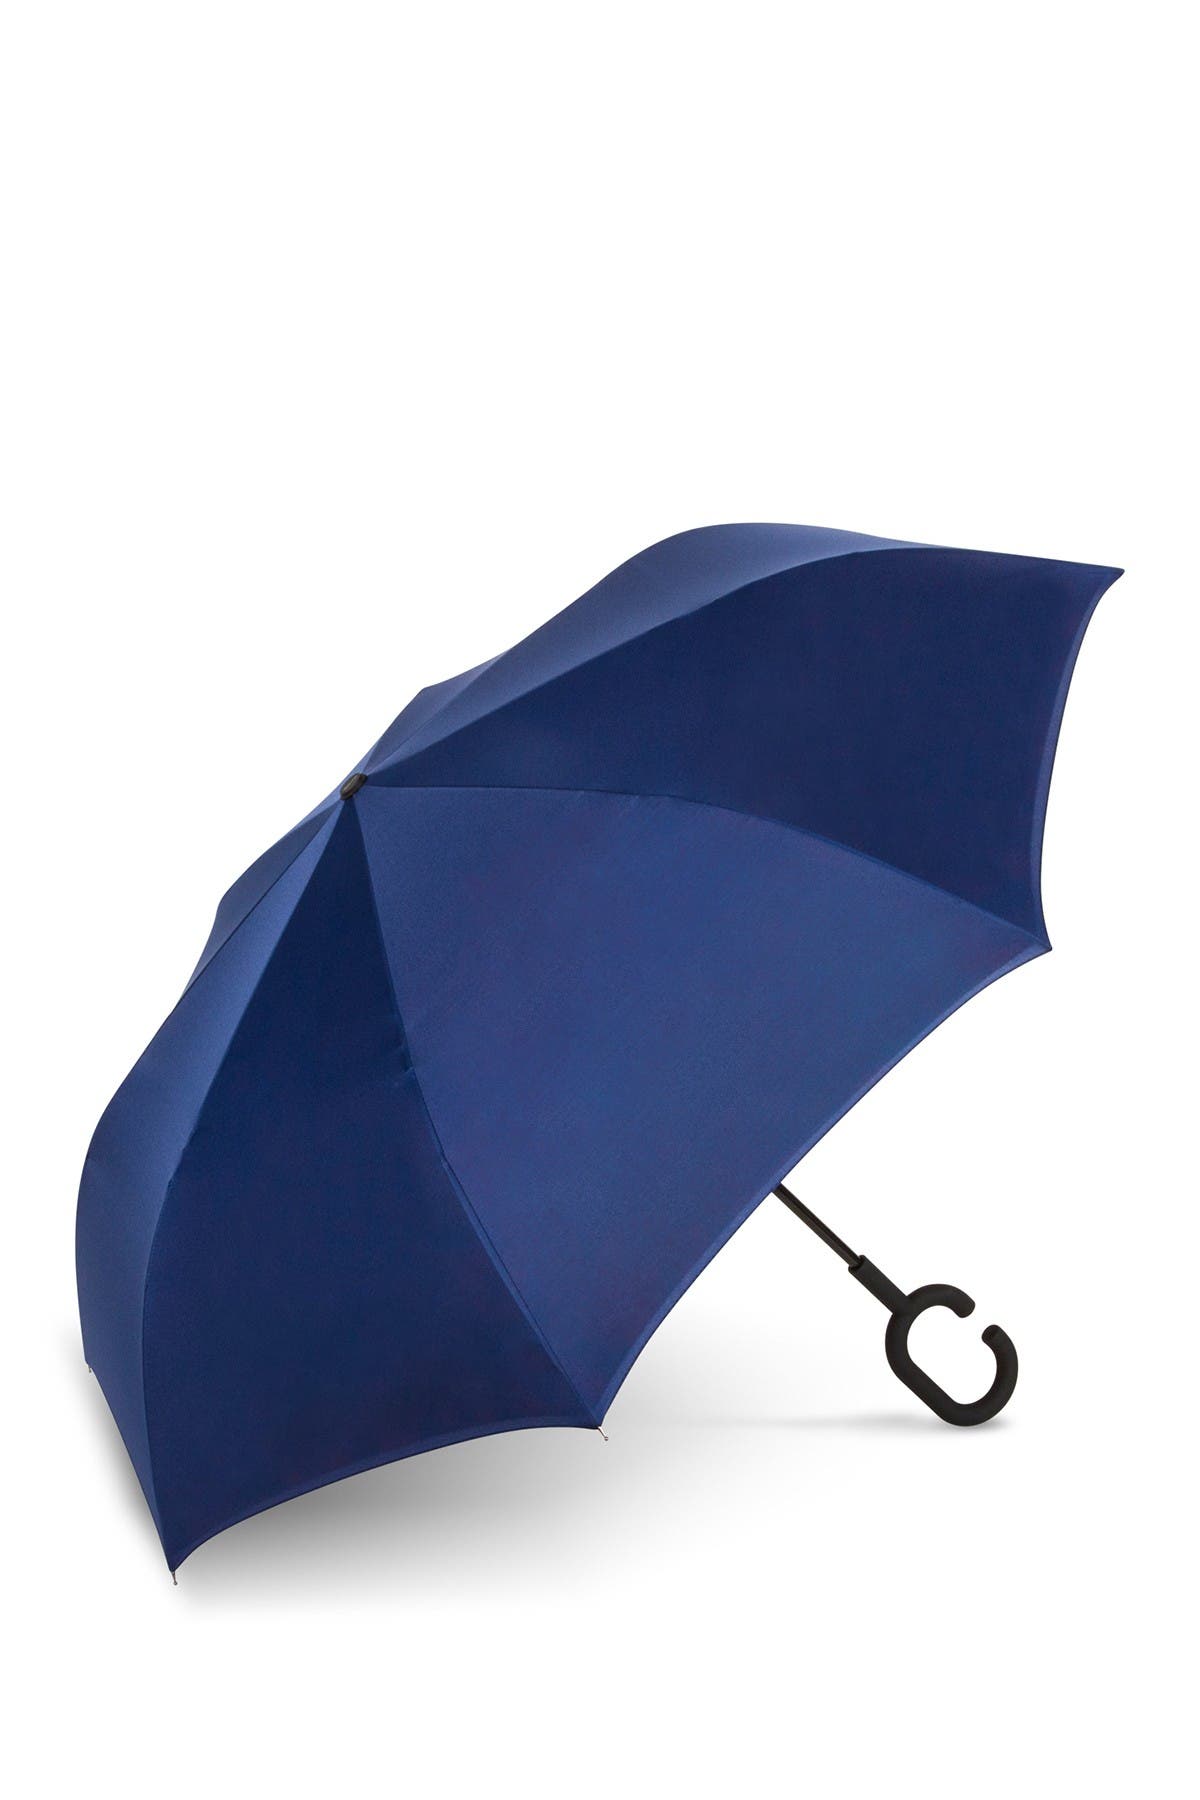 Shedrain Unbelievabrella Reversible Umbrella In Open Grey6